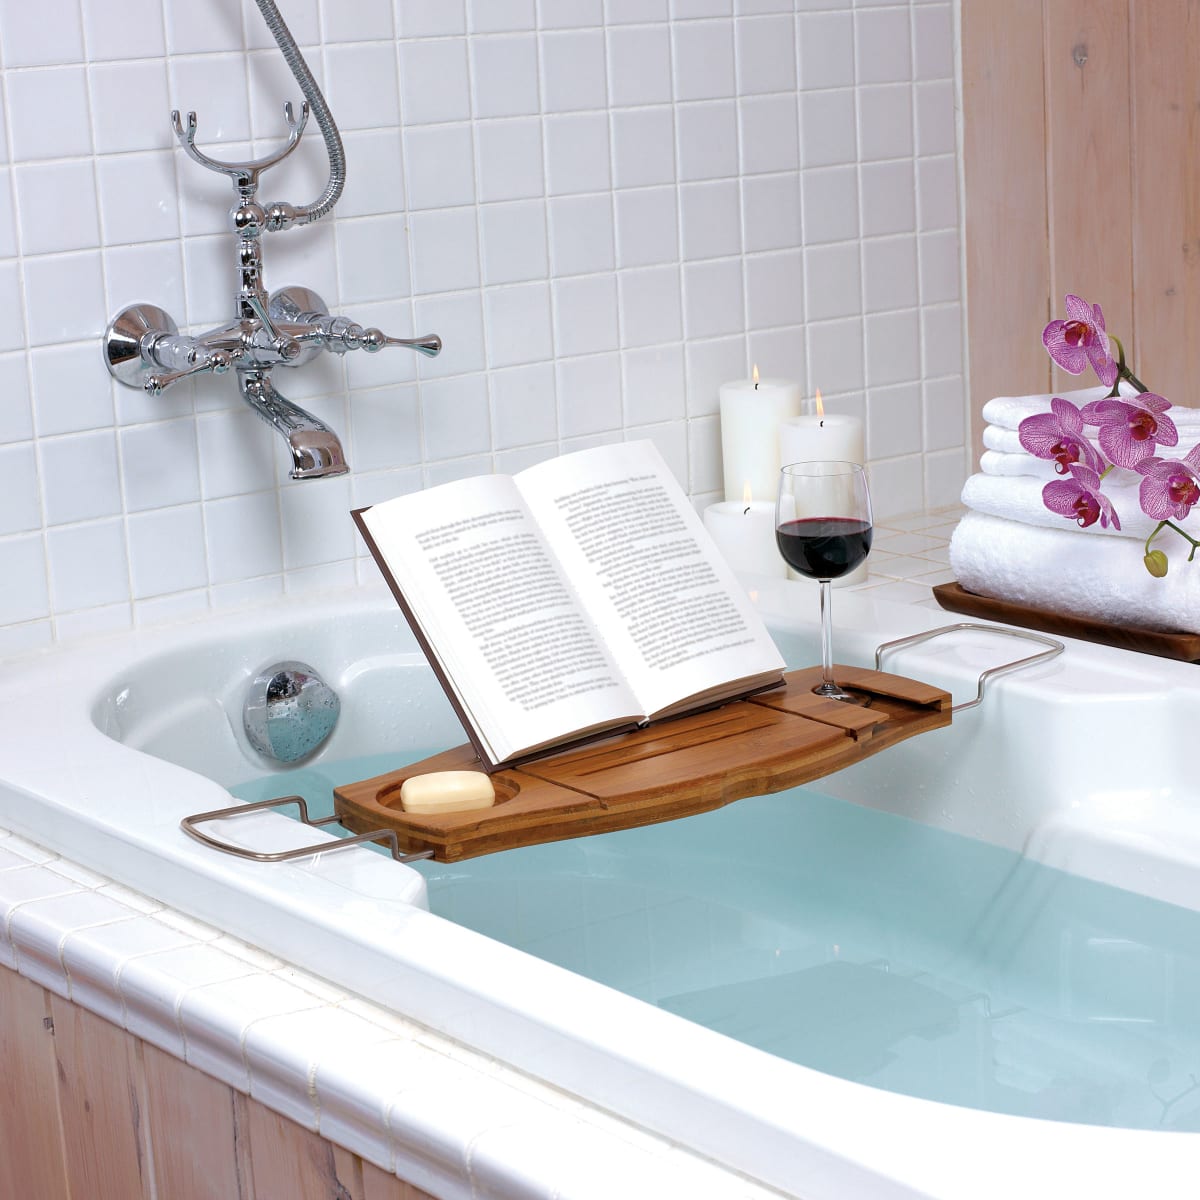 Umbra - Aquala bathtub shelf